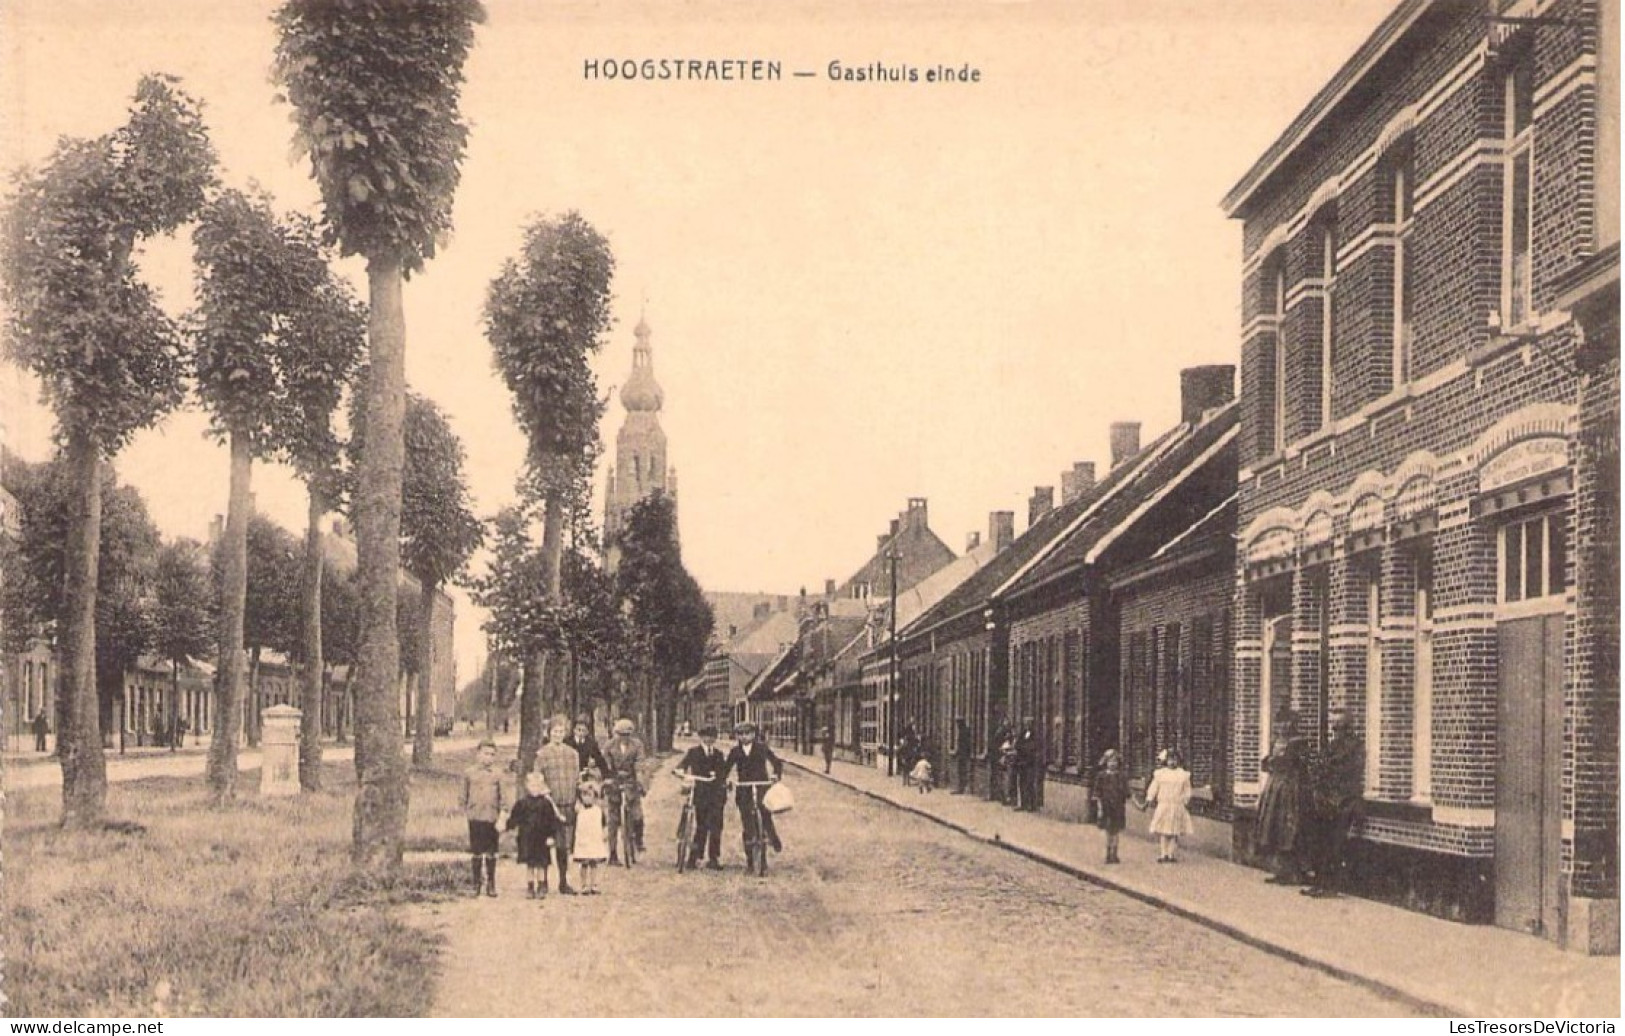 Belgique - Hoogstraeten - Gasthuis Einde - Animé - E. Desaix - Aerts Horsten - Carte Postale Ancienne - Turnhout